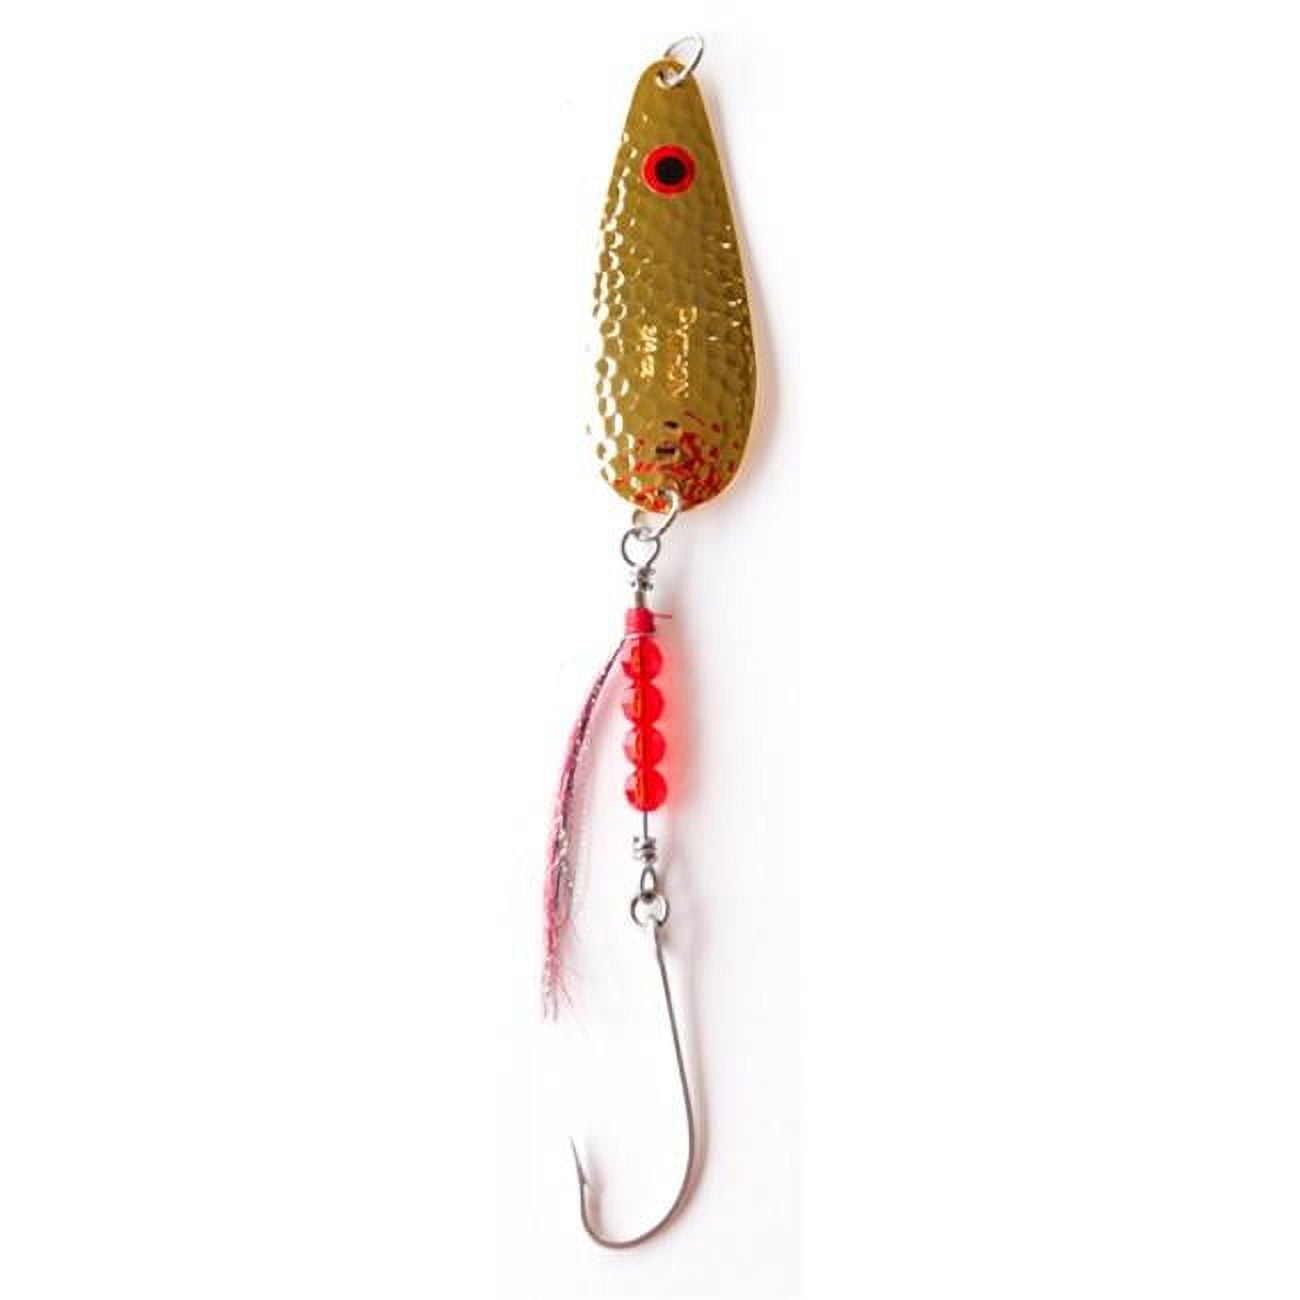 Thundermist Lures CS-075-H-GD Bucktail Python Darter Casting Spoon,  Gold - 0.75 oz 